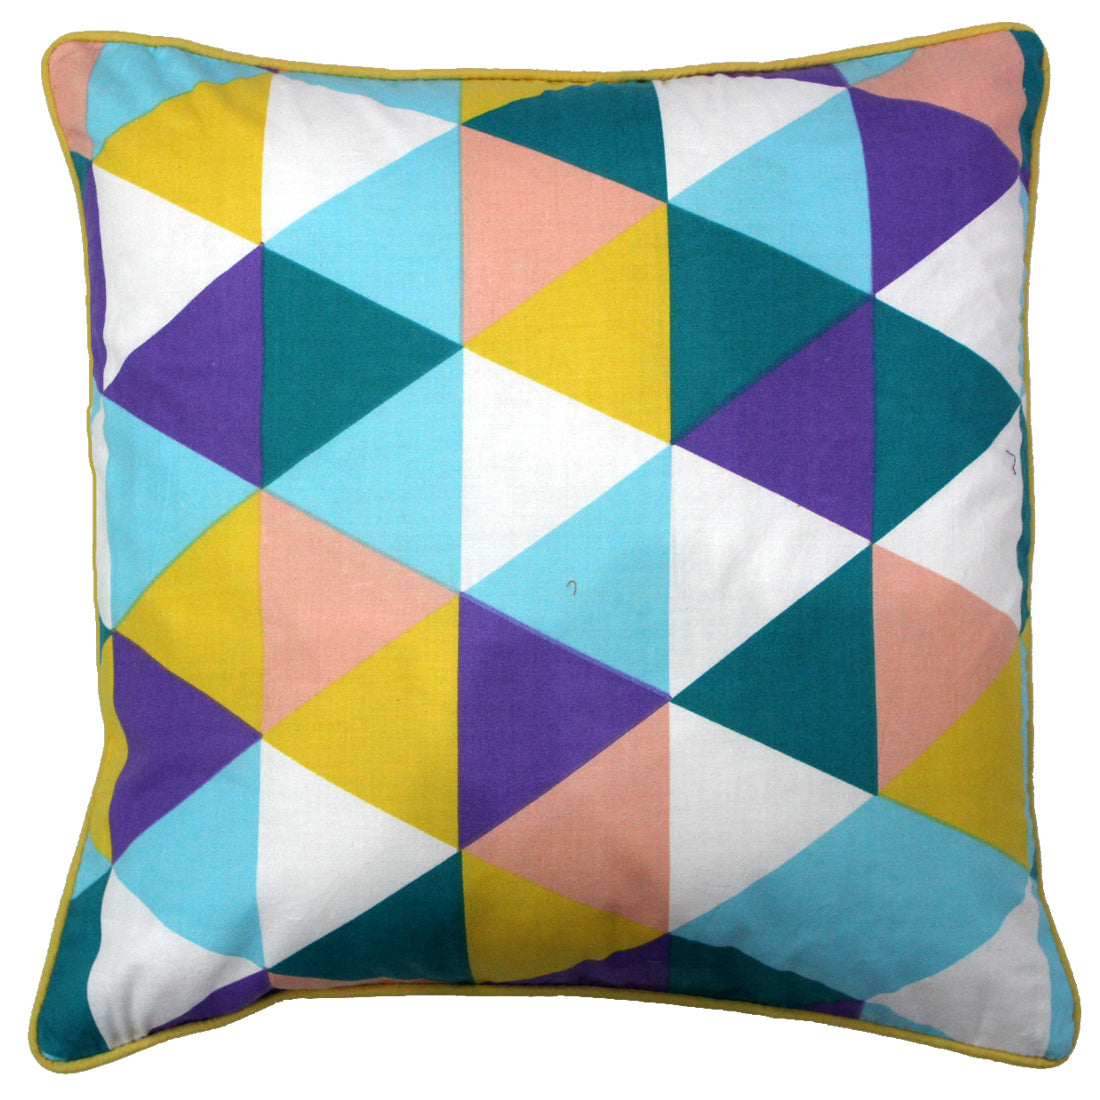 Quartz Printed Geometrical Cotton Cushion Cover - Multicolor